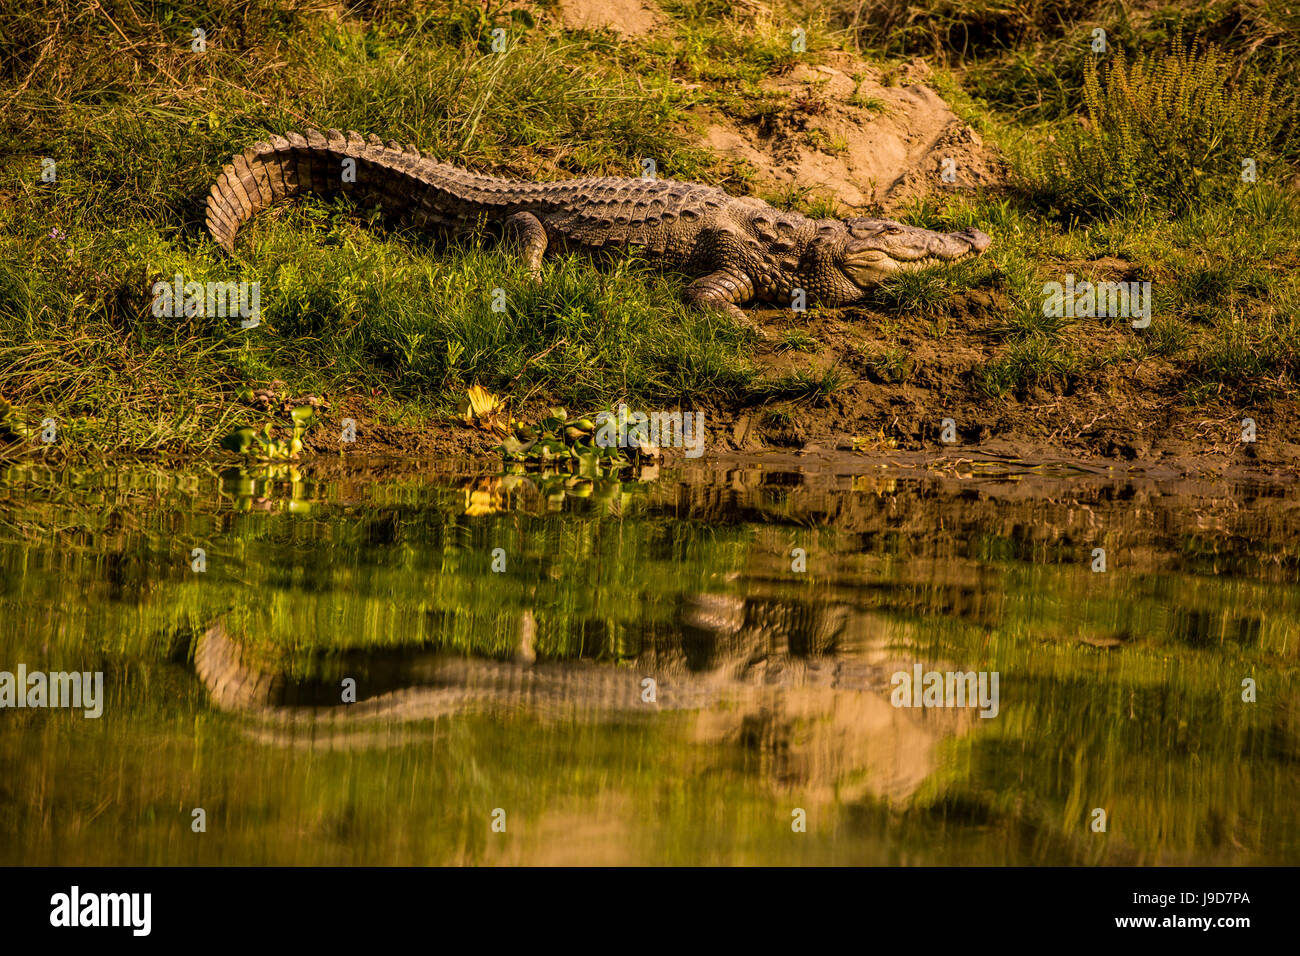 Krokodil sonnte sich durch einen Fluss, Chitwan Elefanten Sanctuary, Nepal, Asien Stockfoto